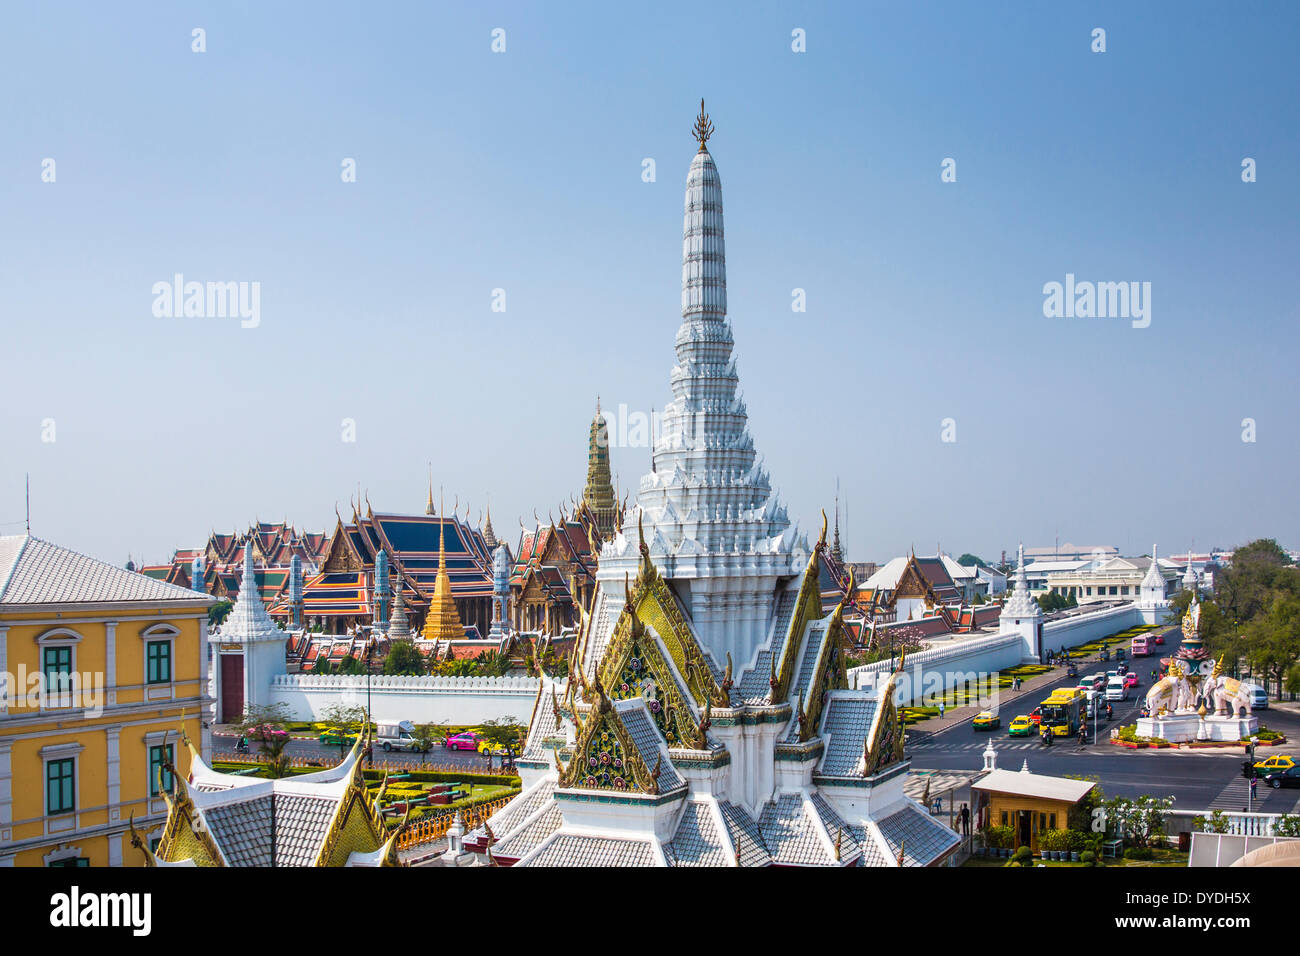 Asia Thailandia Bangkok Royal Palace Wat Phra Kaew architettura colori variopinti downtown storia famosa immagine di panorama palace Foto Stock